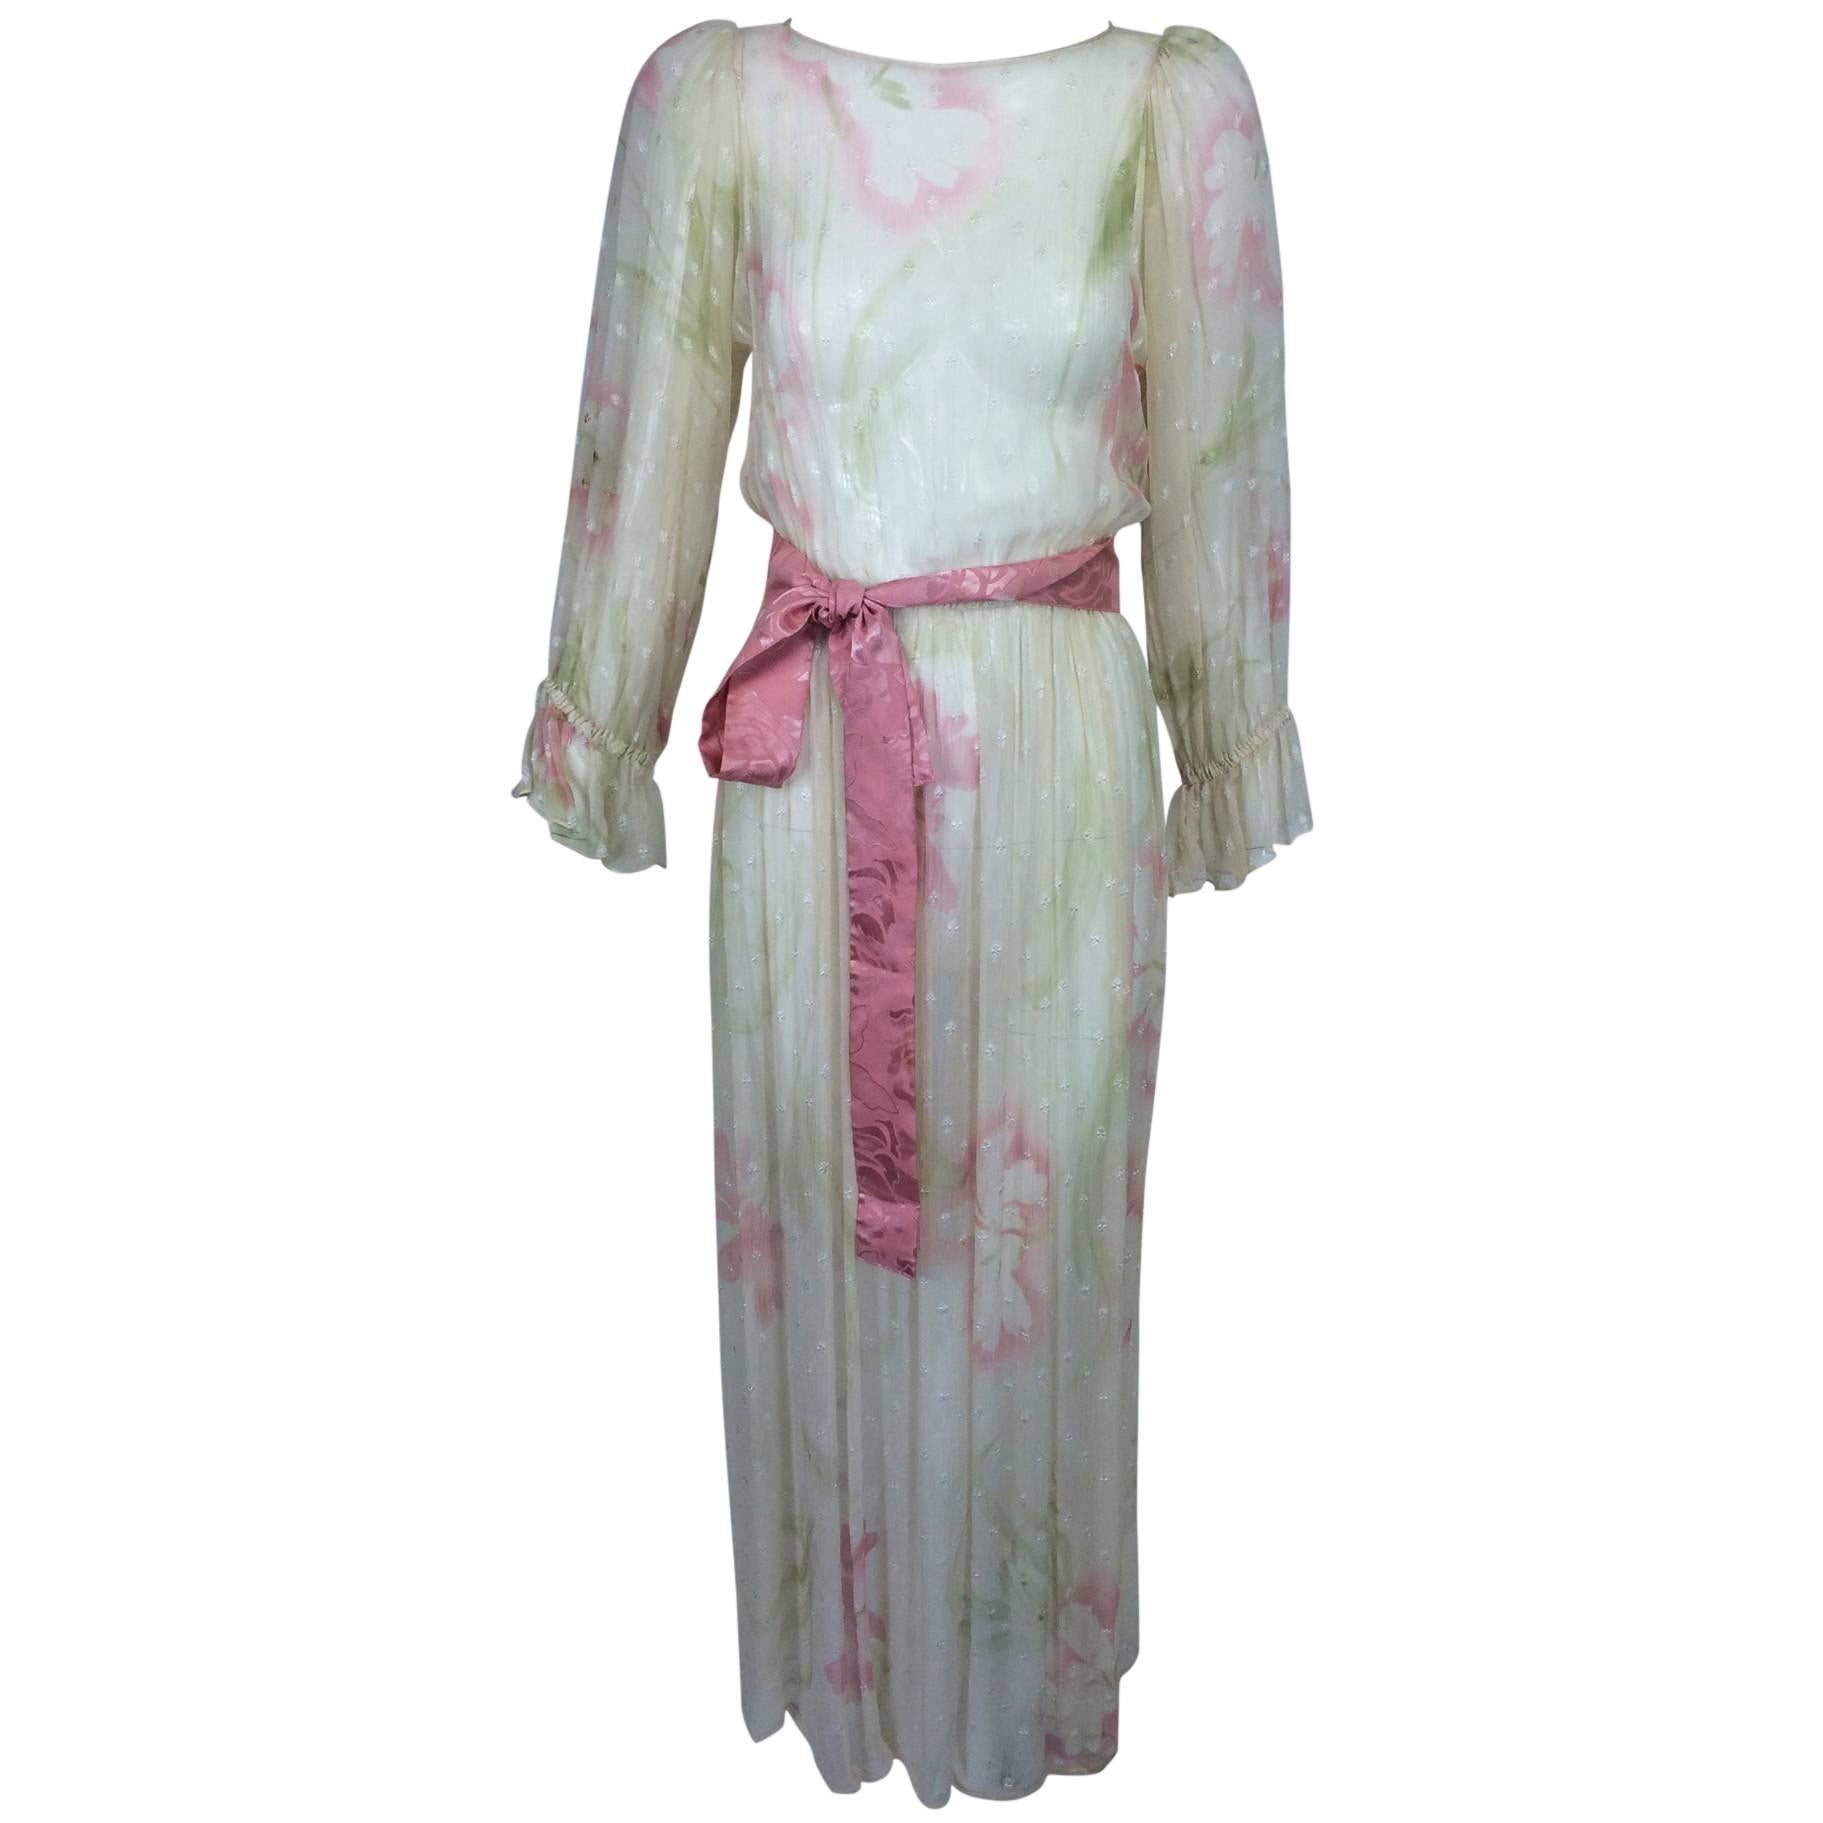 Vintage Hollys Harp off white sheer silk chiffon floral print dress 1960s